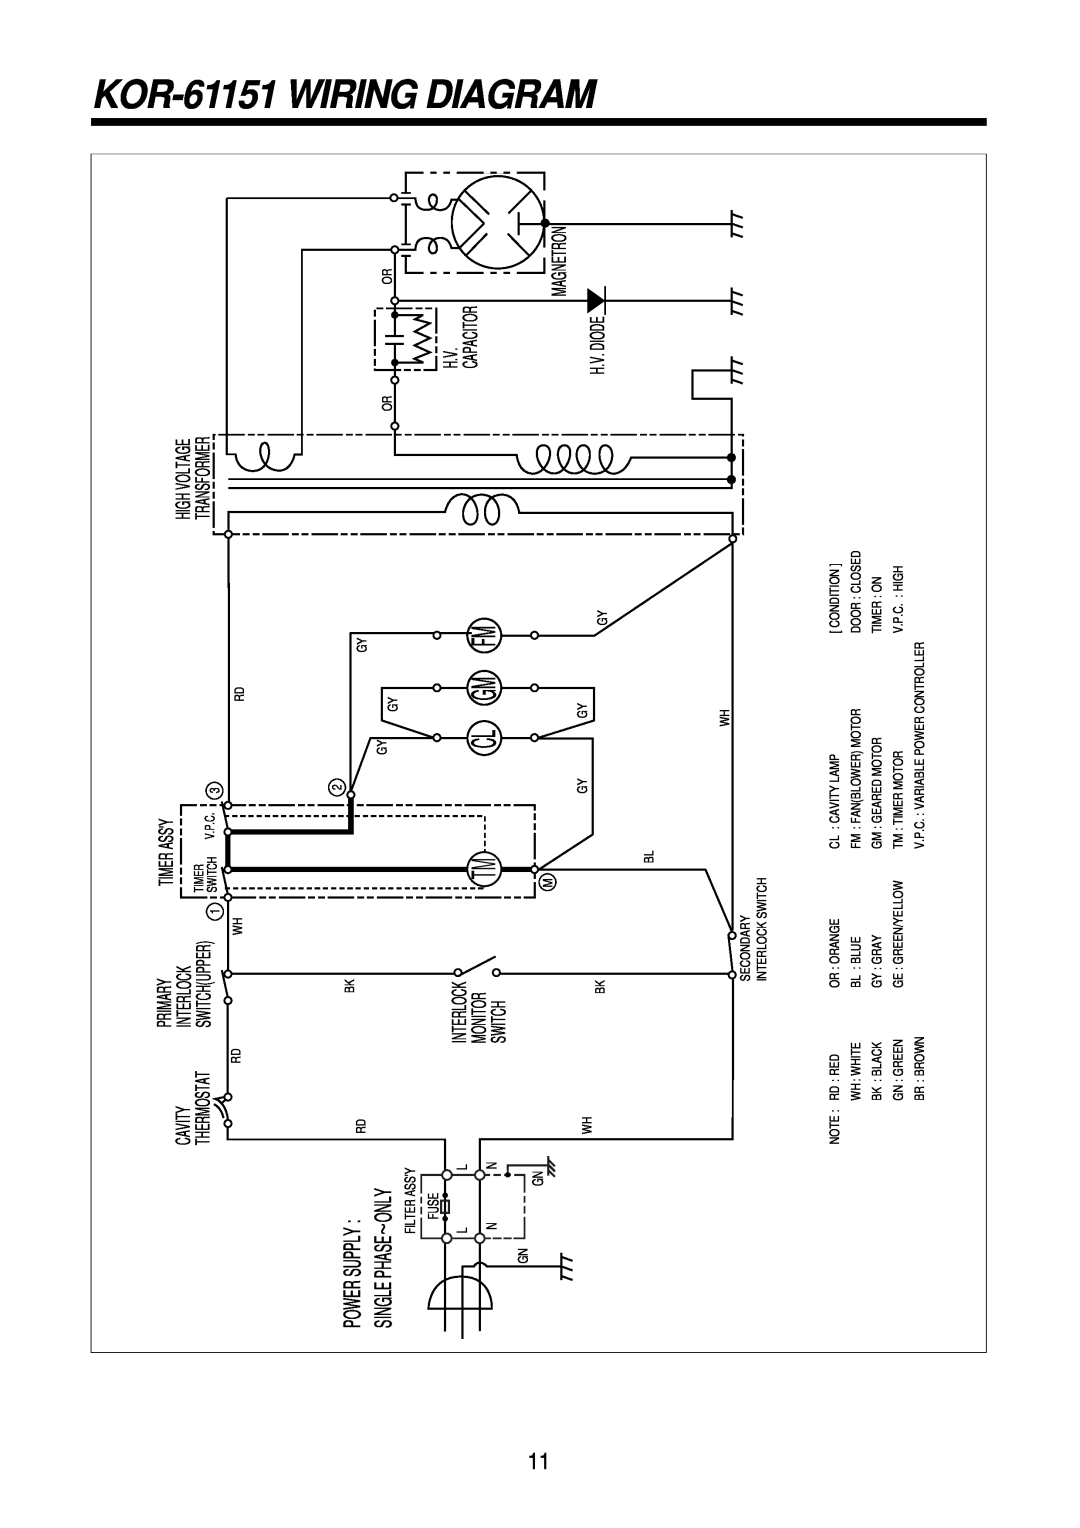 Daewoo KOR-61155 service manual KOR-61151 WIRING DIAGRAM, Power Supply, Single Phase~Only, V.P.C 